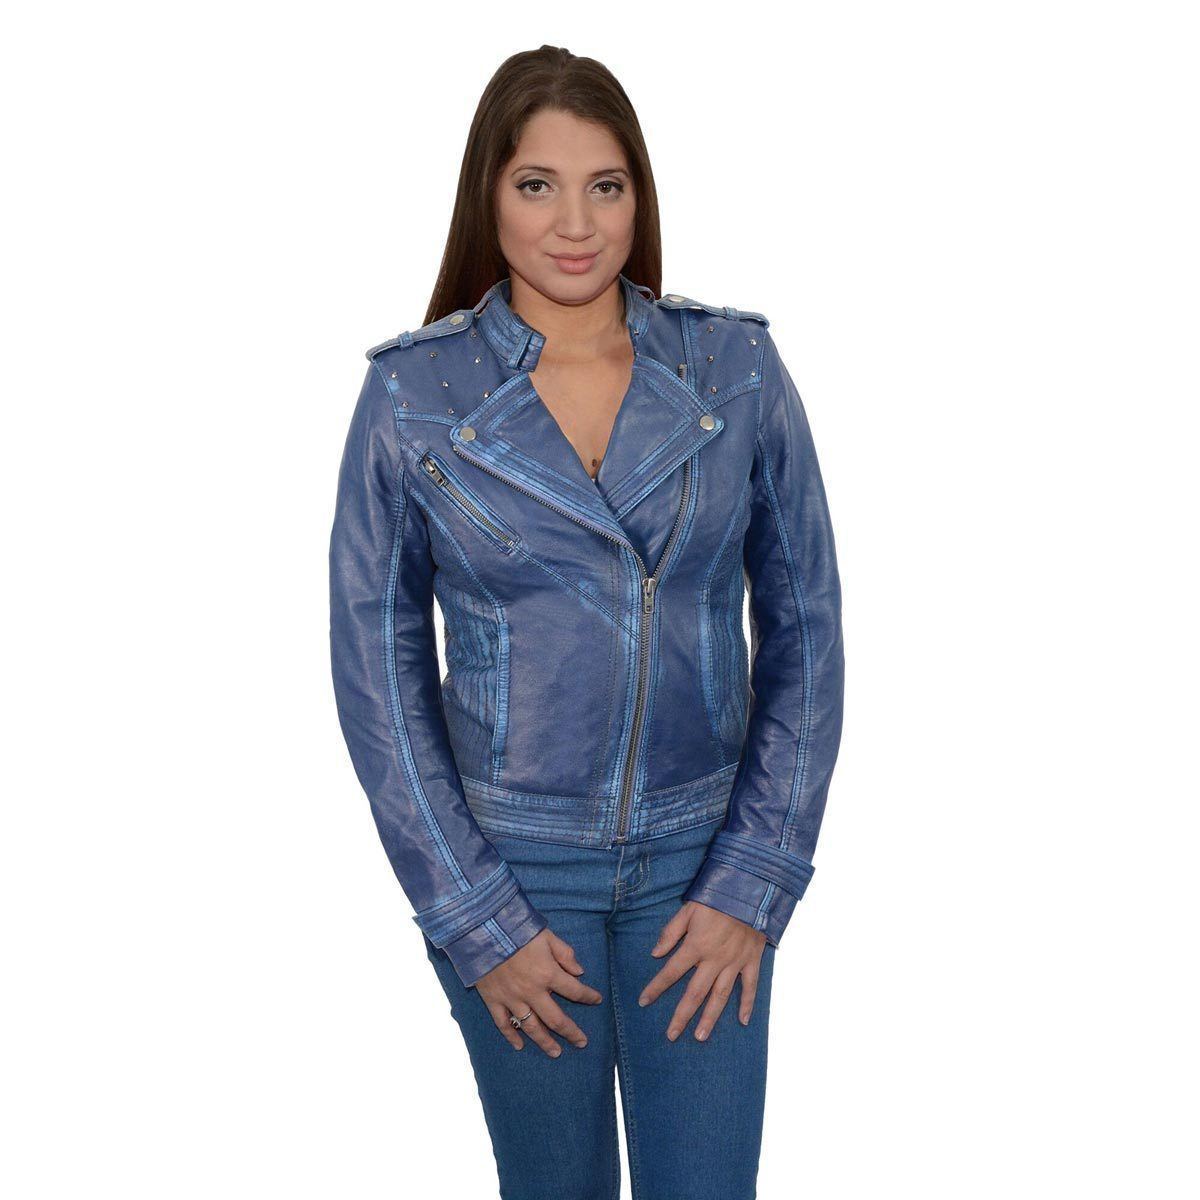 Milwaukee Leather SFL2840 Women's Maiden Royal Blue Premium Sheepskin Motorcycle Fashion Leather Jacket with Studs